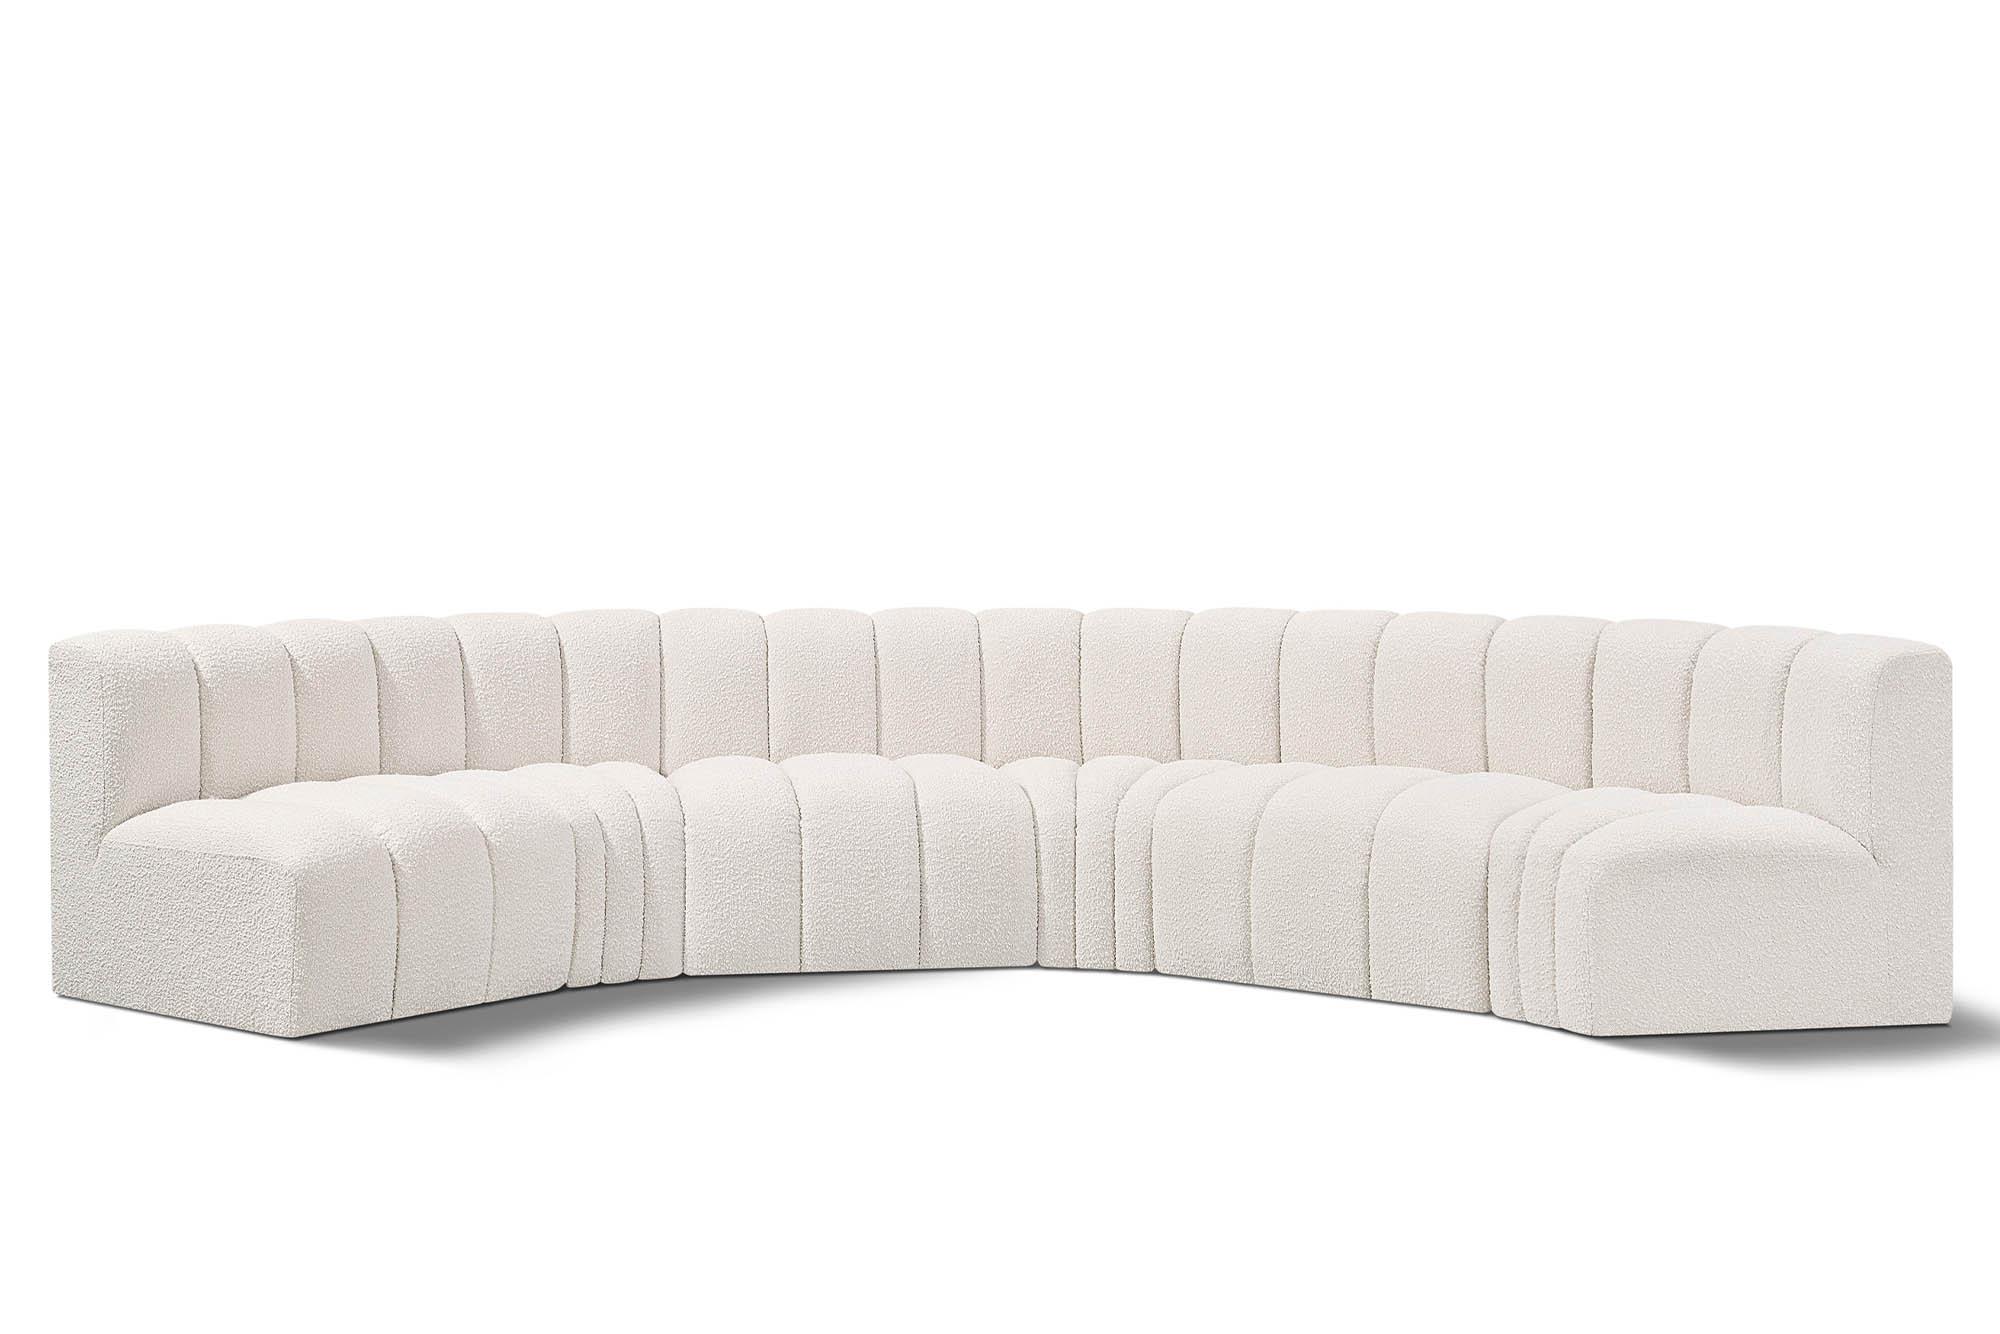 Contemporary, Modern Modular Sectional Sofa ARC 102Cream-S6B 102Cream-S6B in Cream 